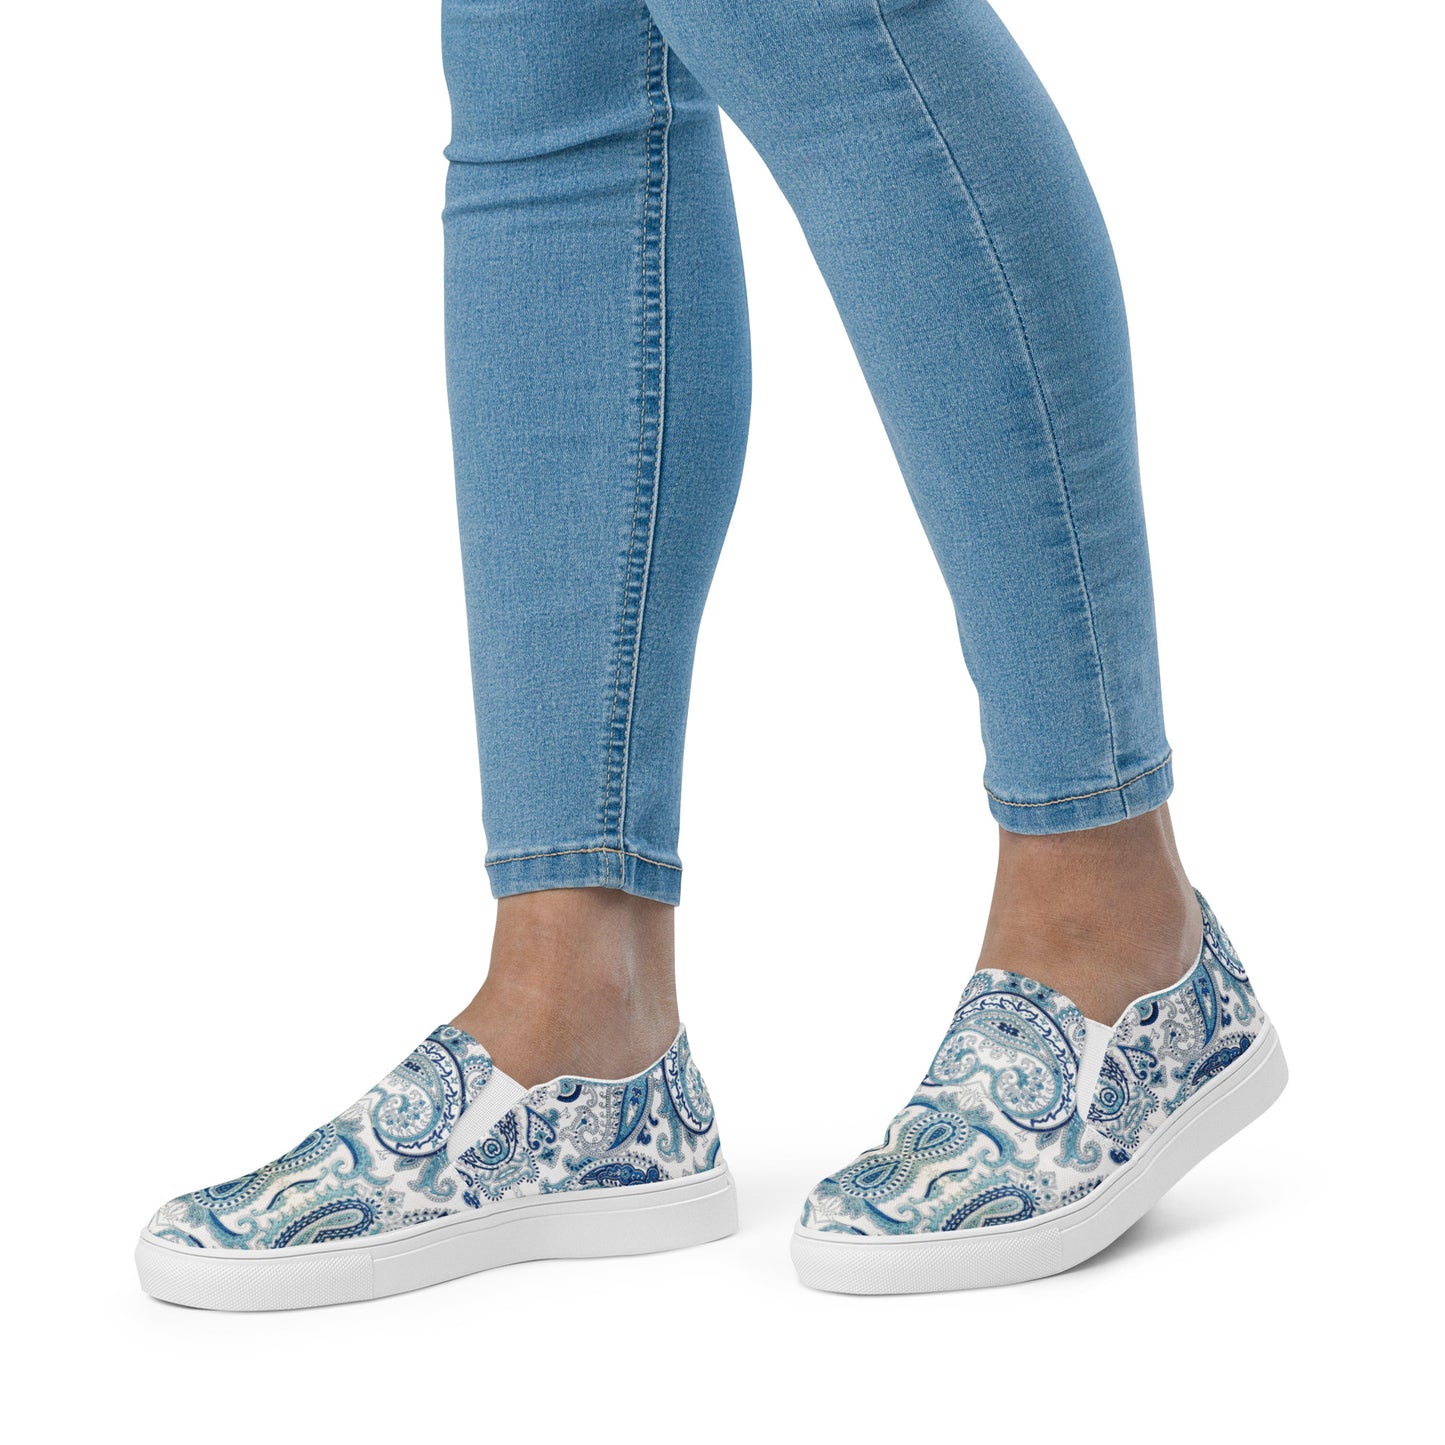 Women’s slip-on canvas shoes Cool White Blue Paisley Design by IOBI Original Apparel